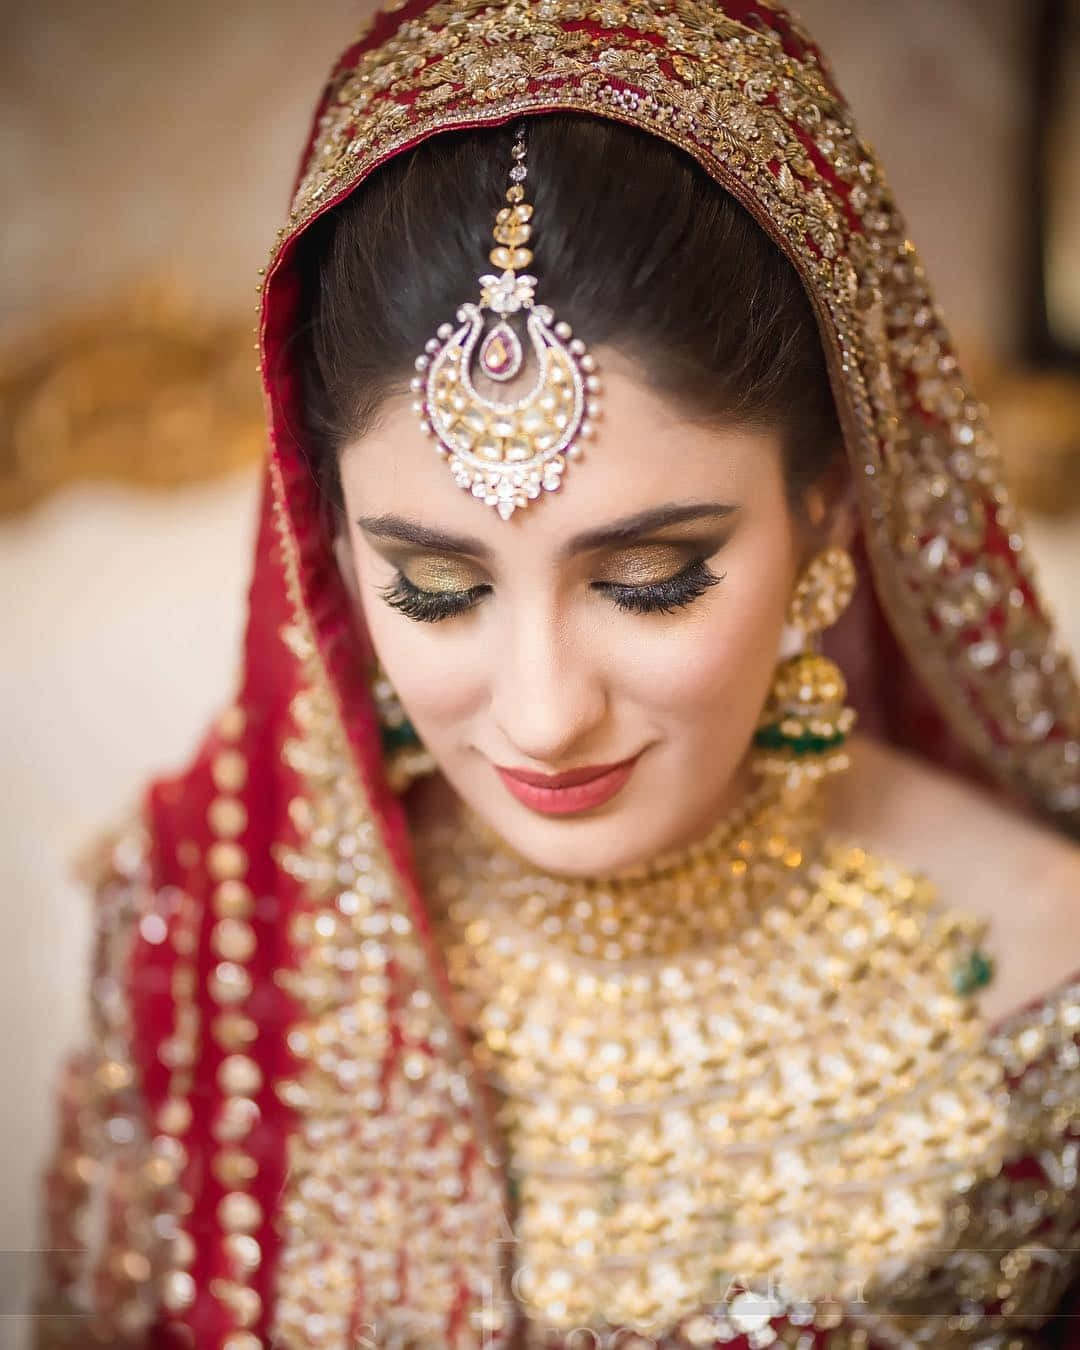 Download Bridal Makeup Pictures | Wallpapers.com